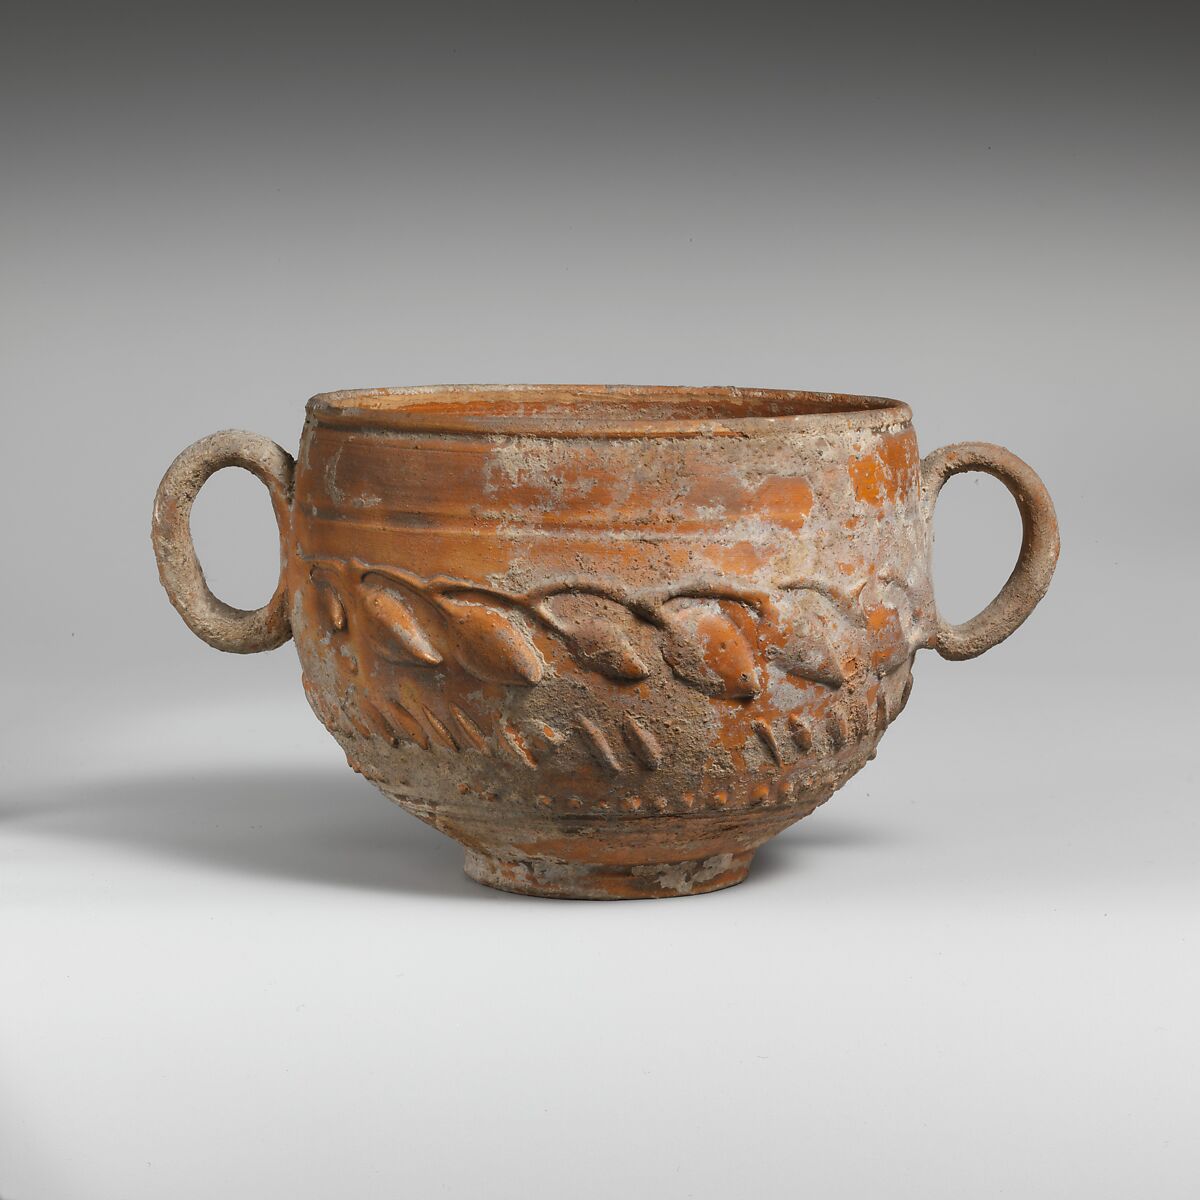 Terracotta scyphus (drinking cup) with barbotine decoration, Terracotta, Roman 